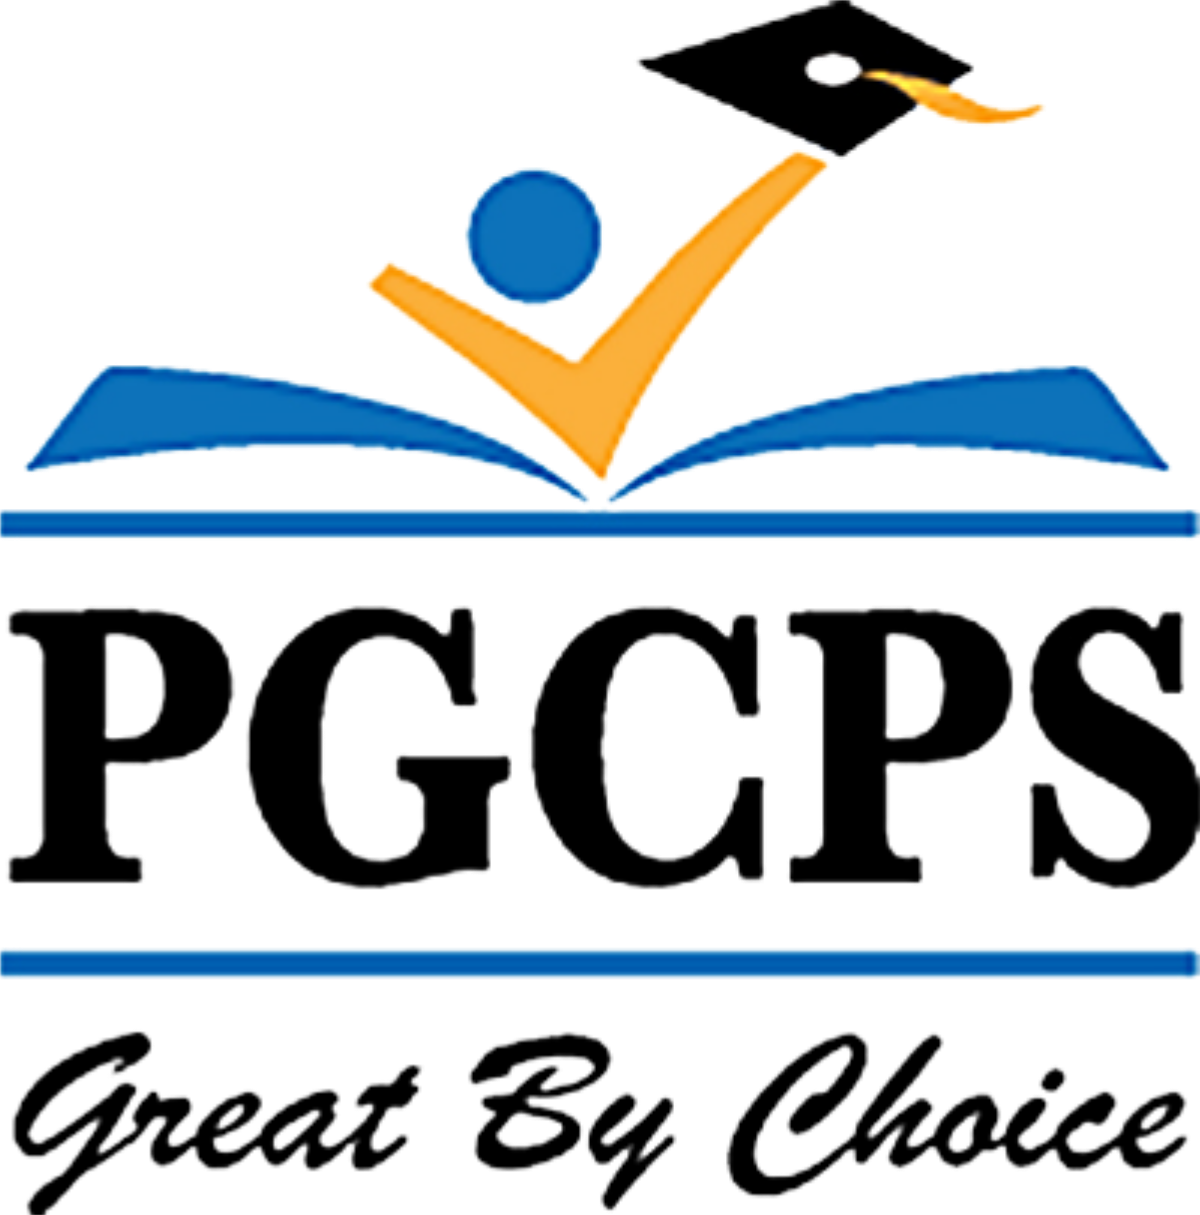 Prince George’s County Public Schools